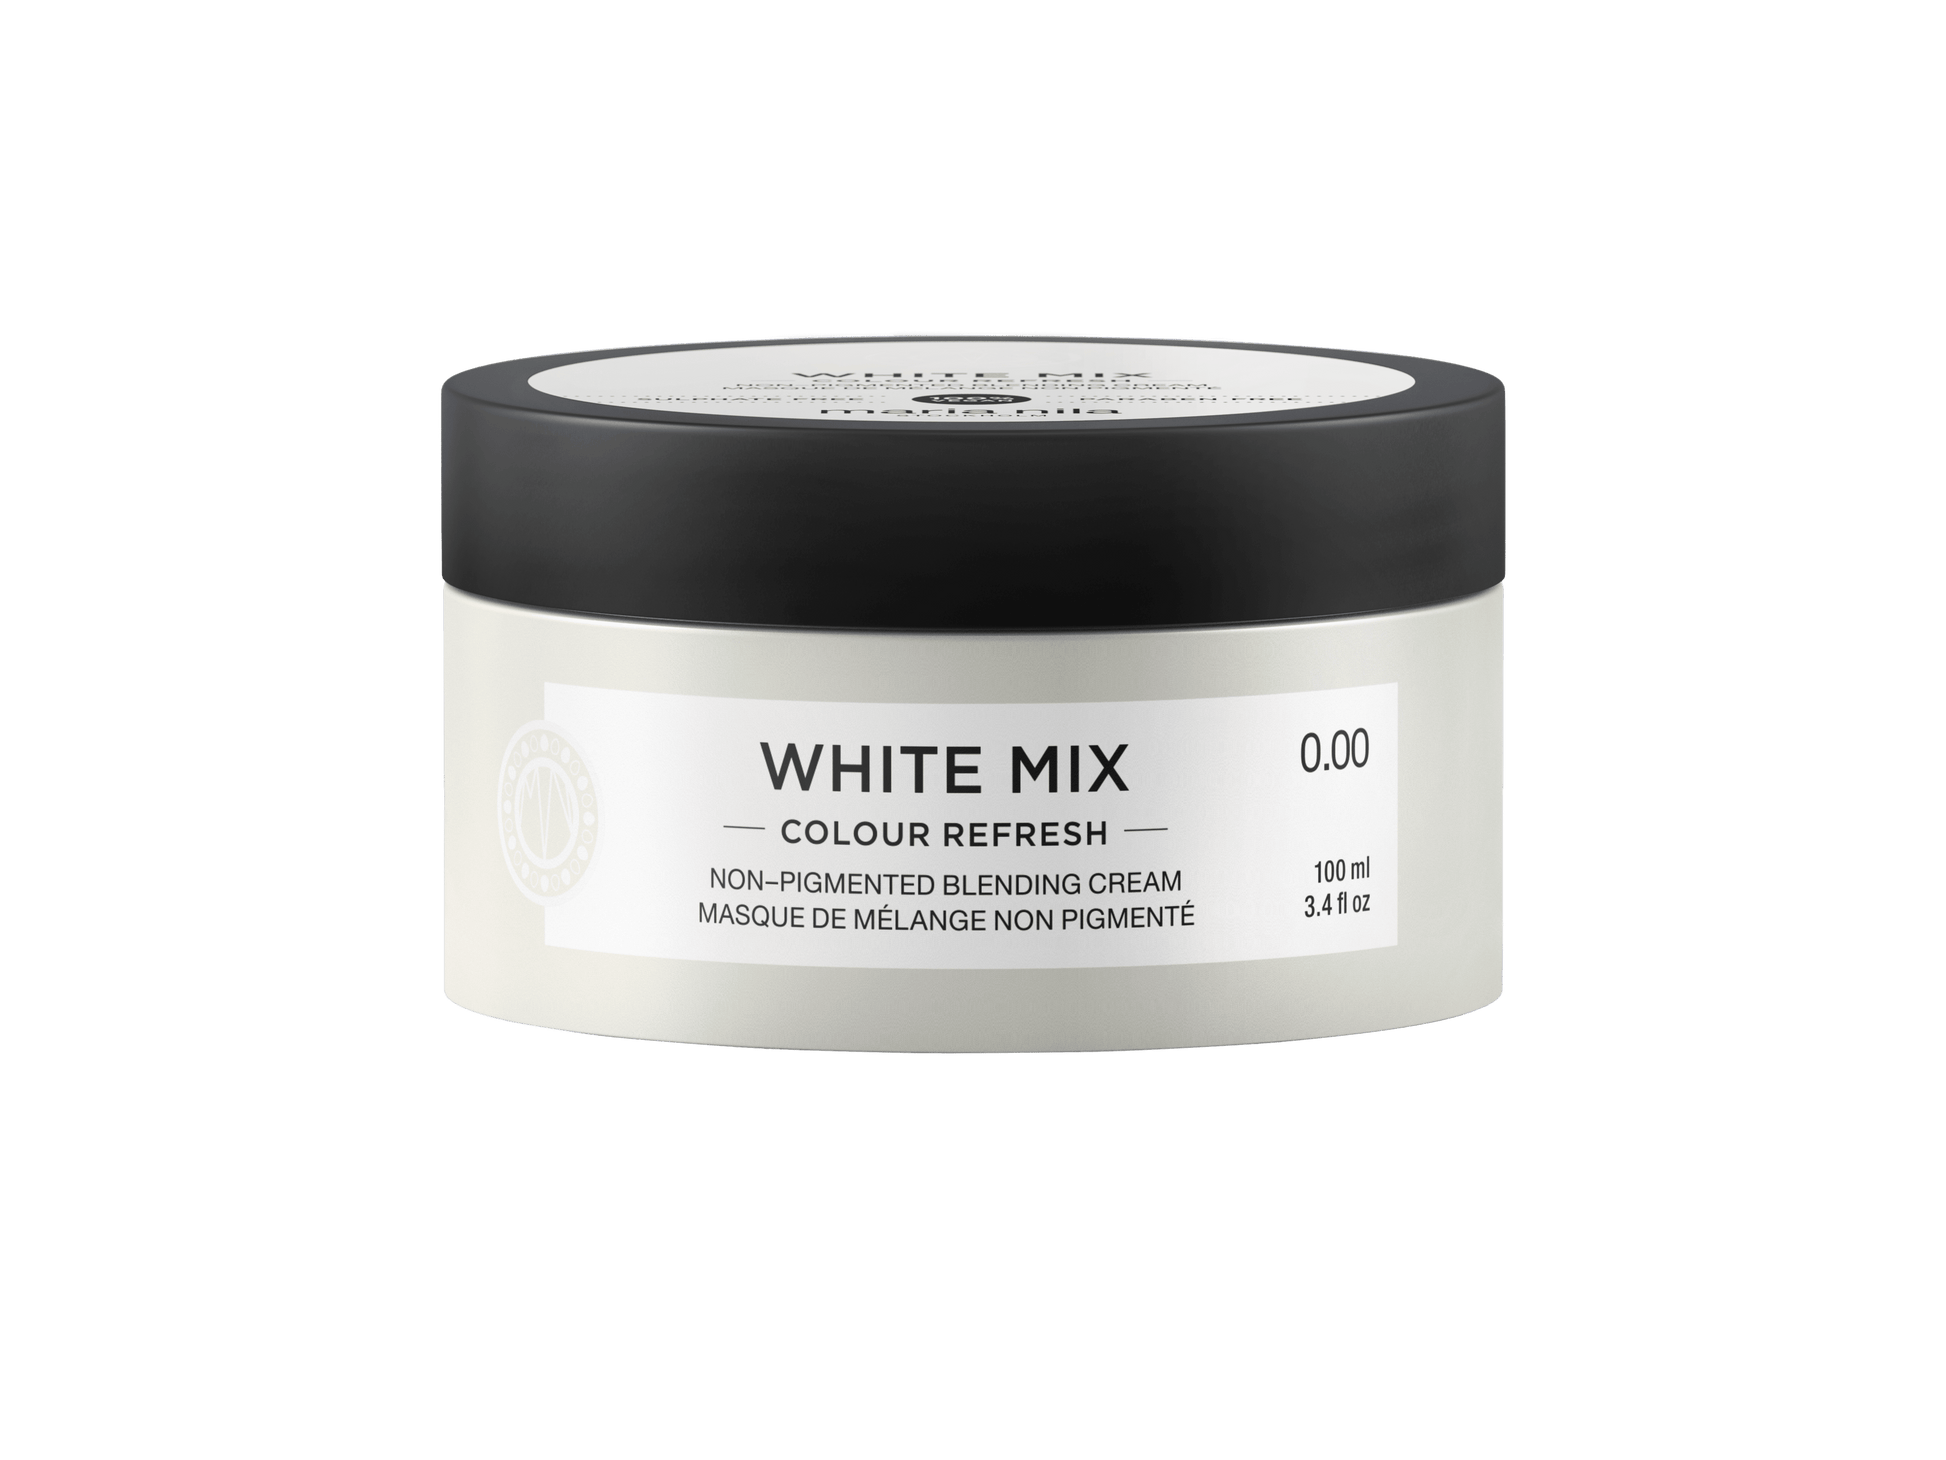 Colour Refresh White Mix - The Coloroom 